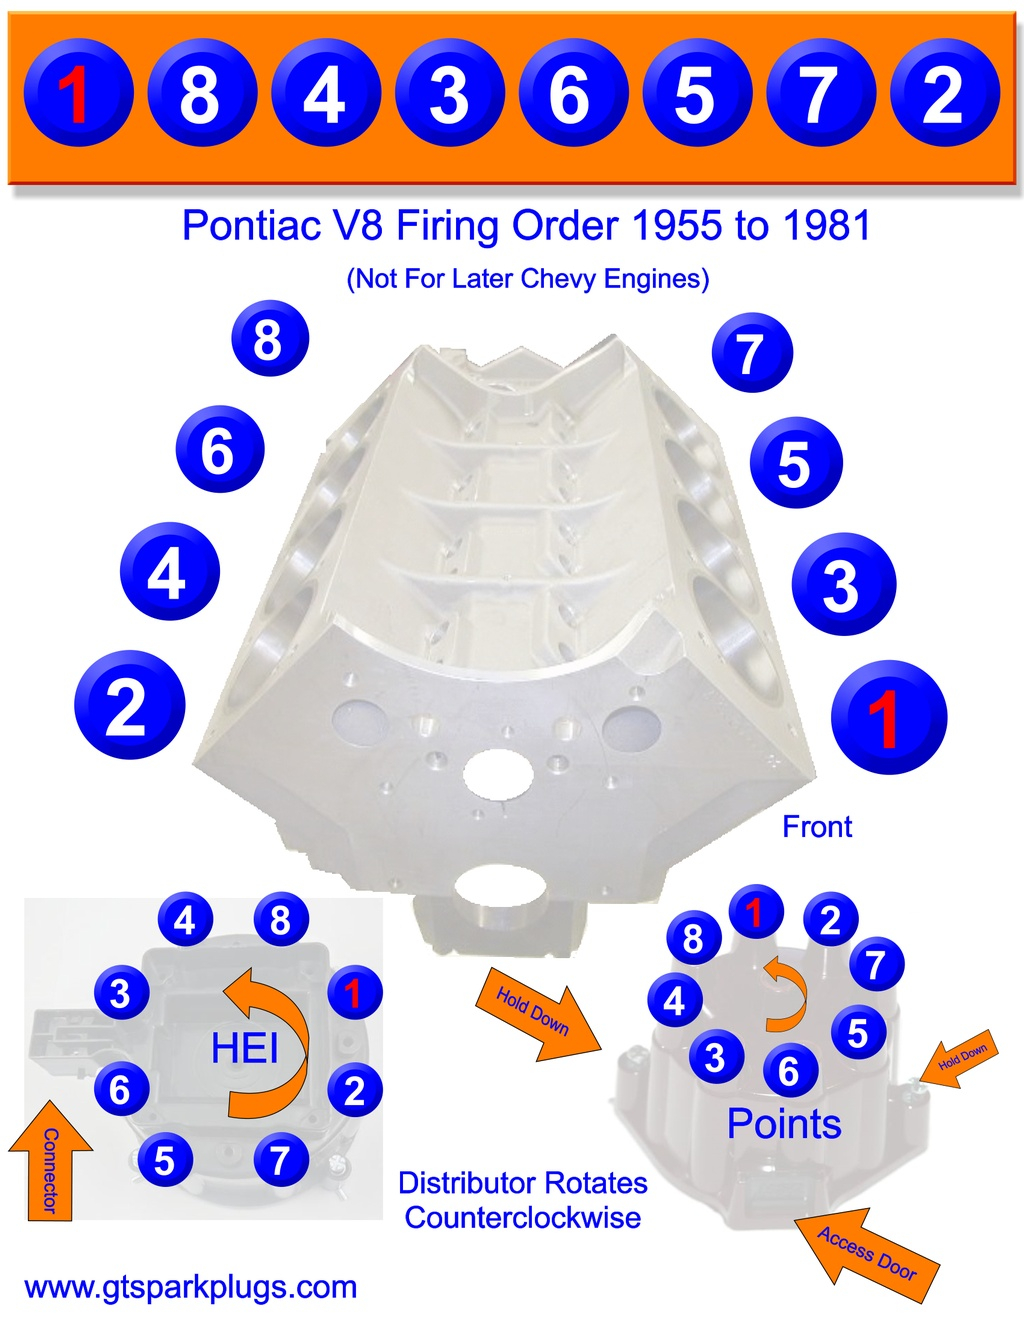 Pontiac V8 Firing Order | Gtsparkplugs